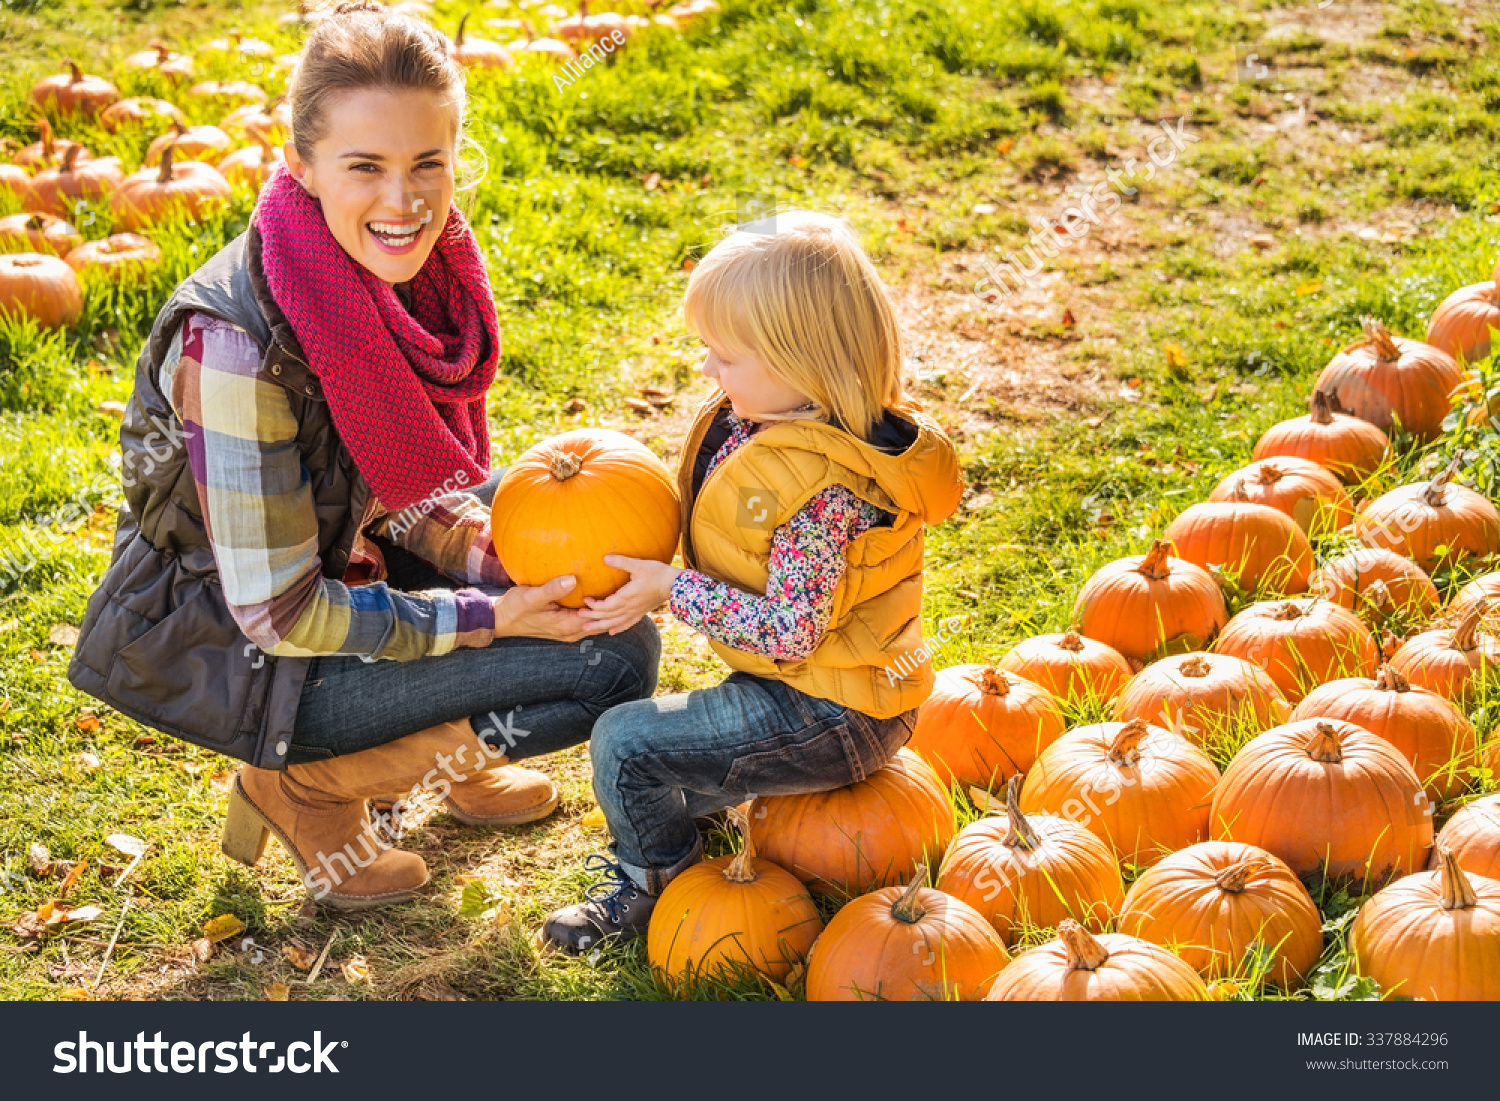 Beautiful Smiling Woman And Child Choosing A Pumpkin On A Pumpkin Patch ...